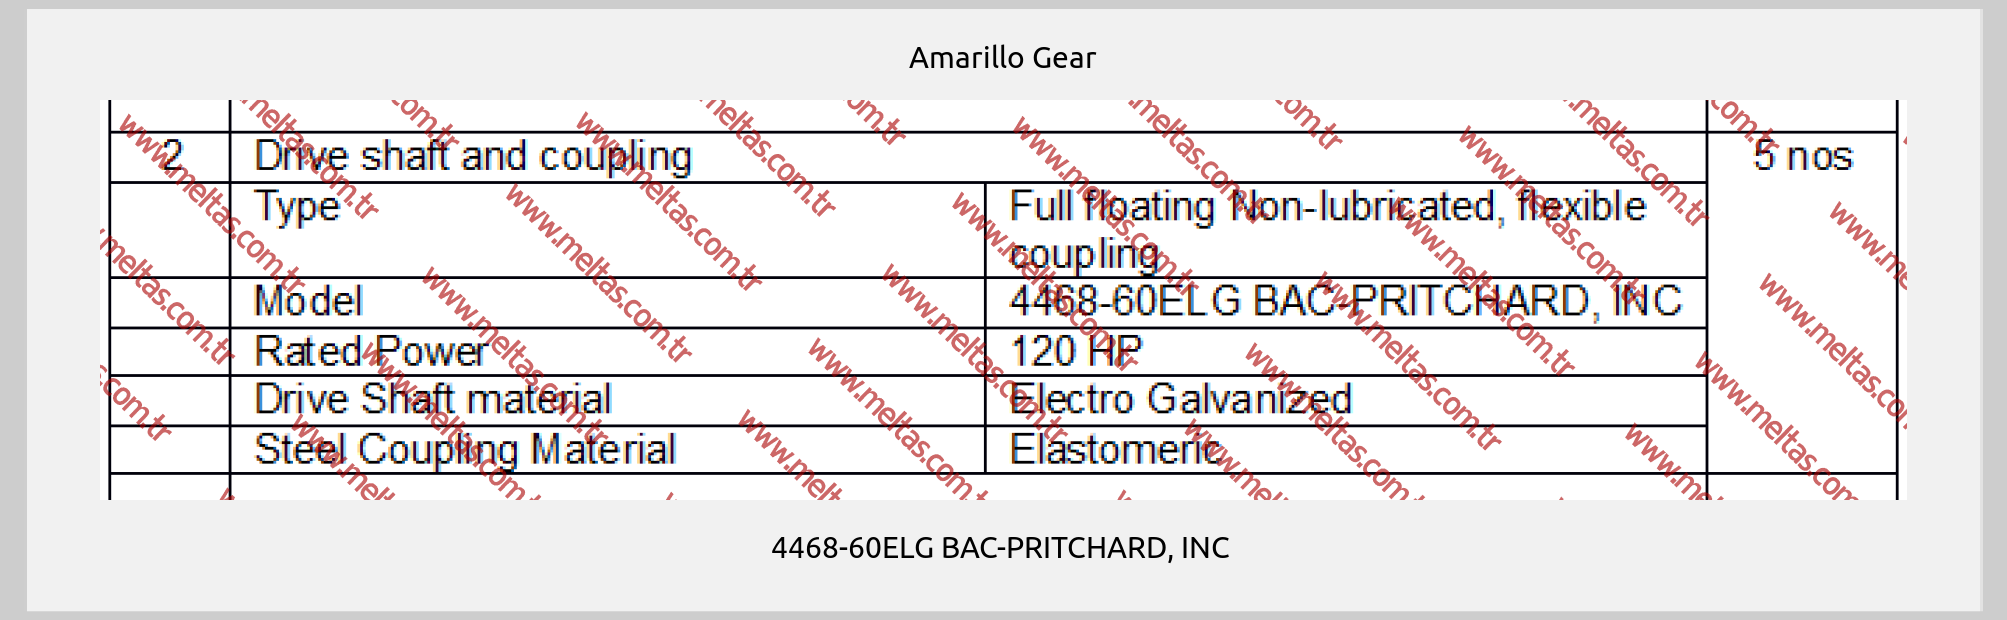 Amarillo Gear-4468-60ELG BAC-PRITCHARD, INC 